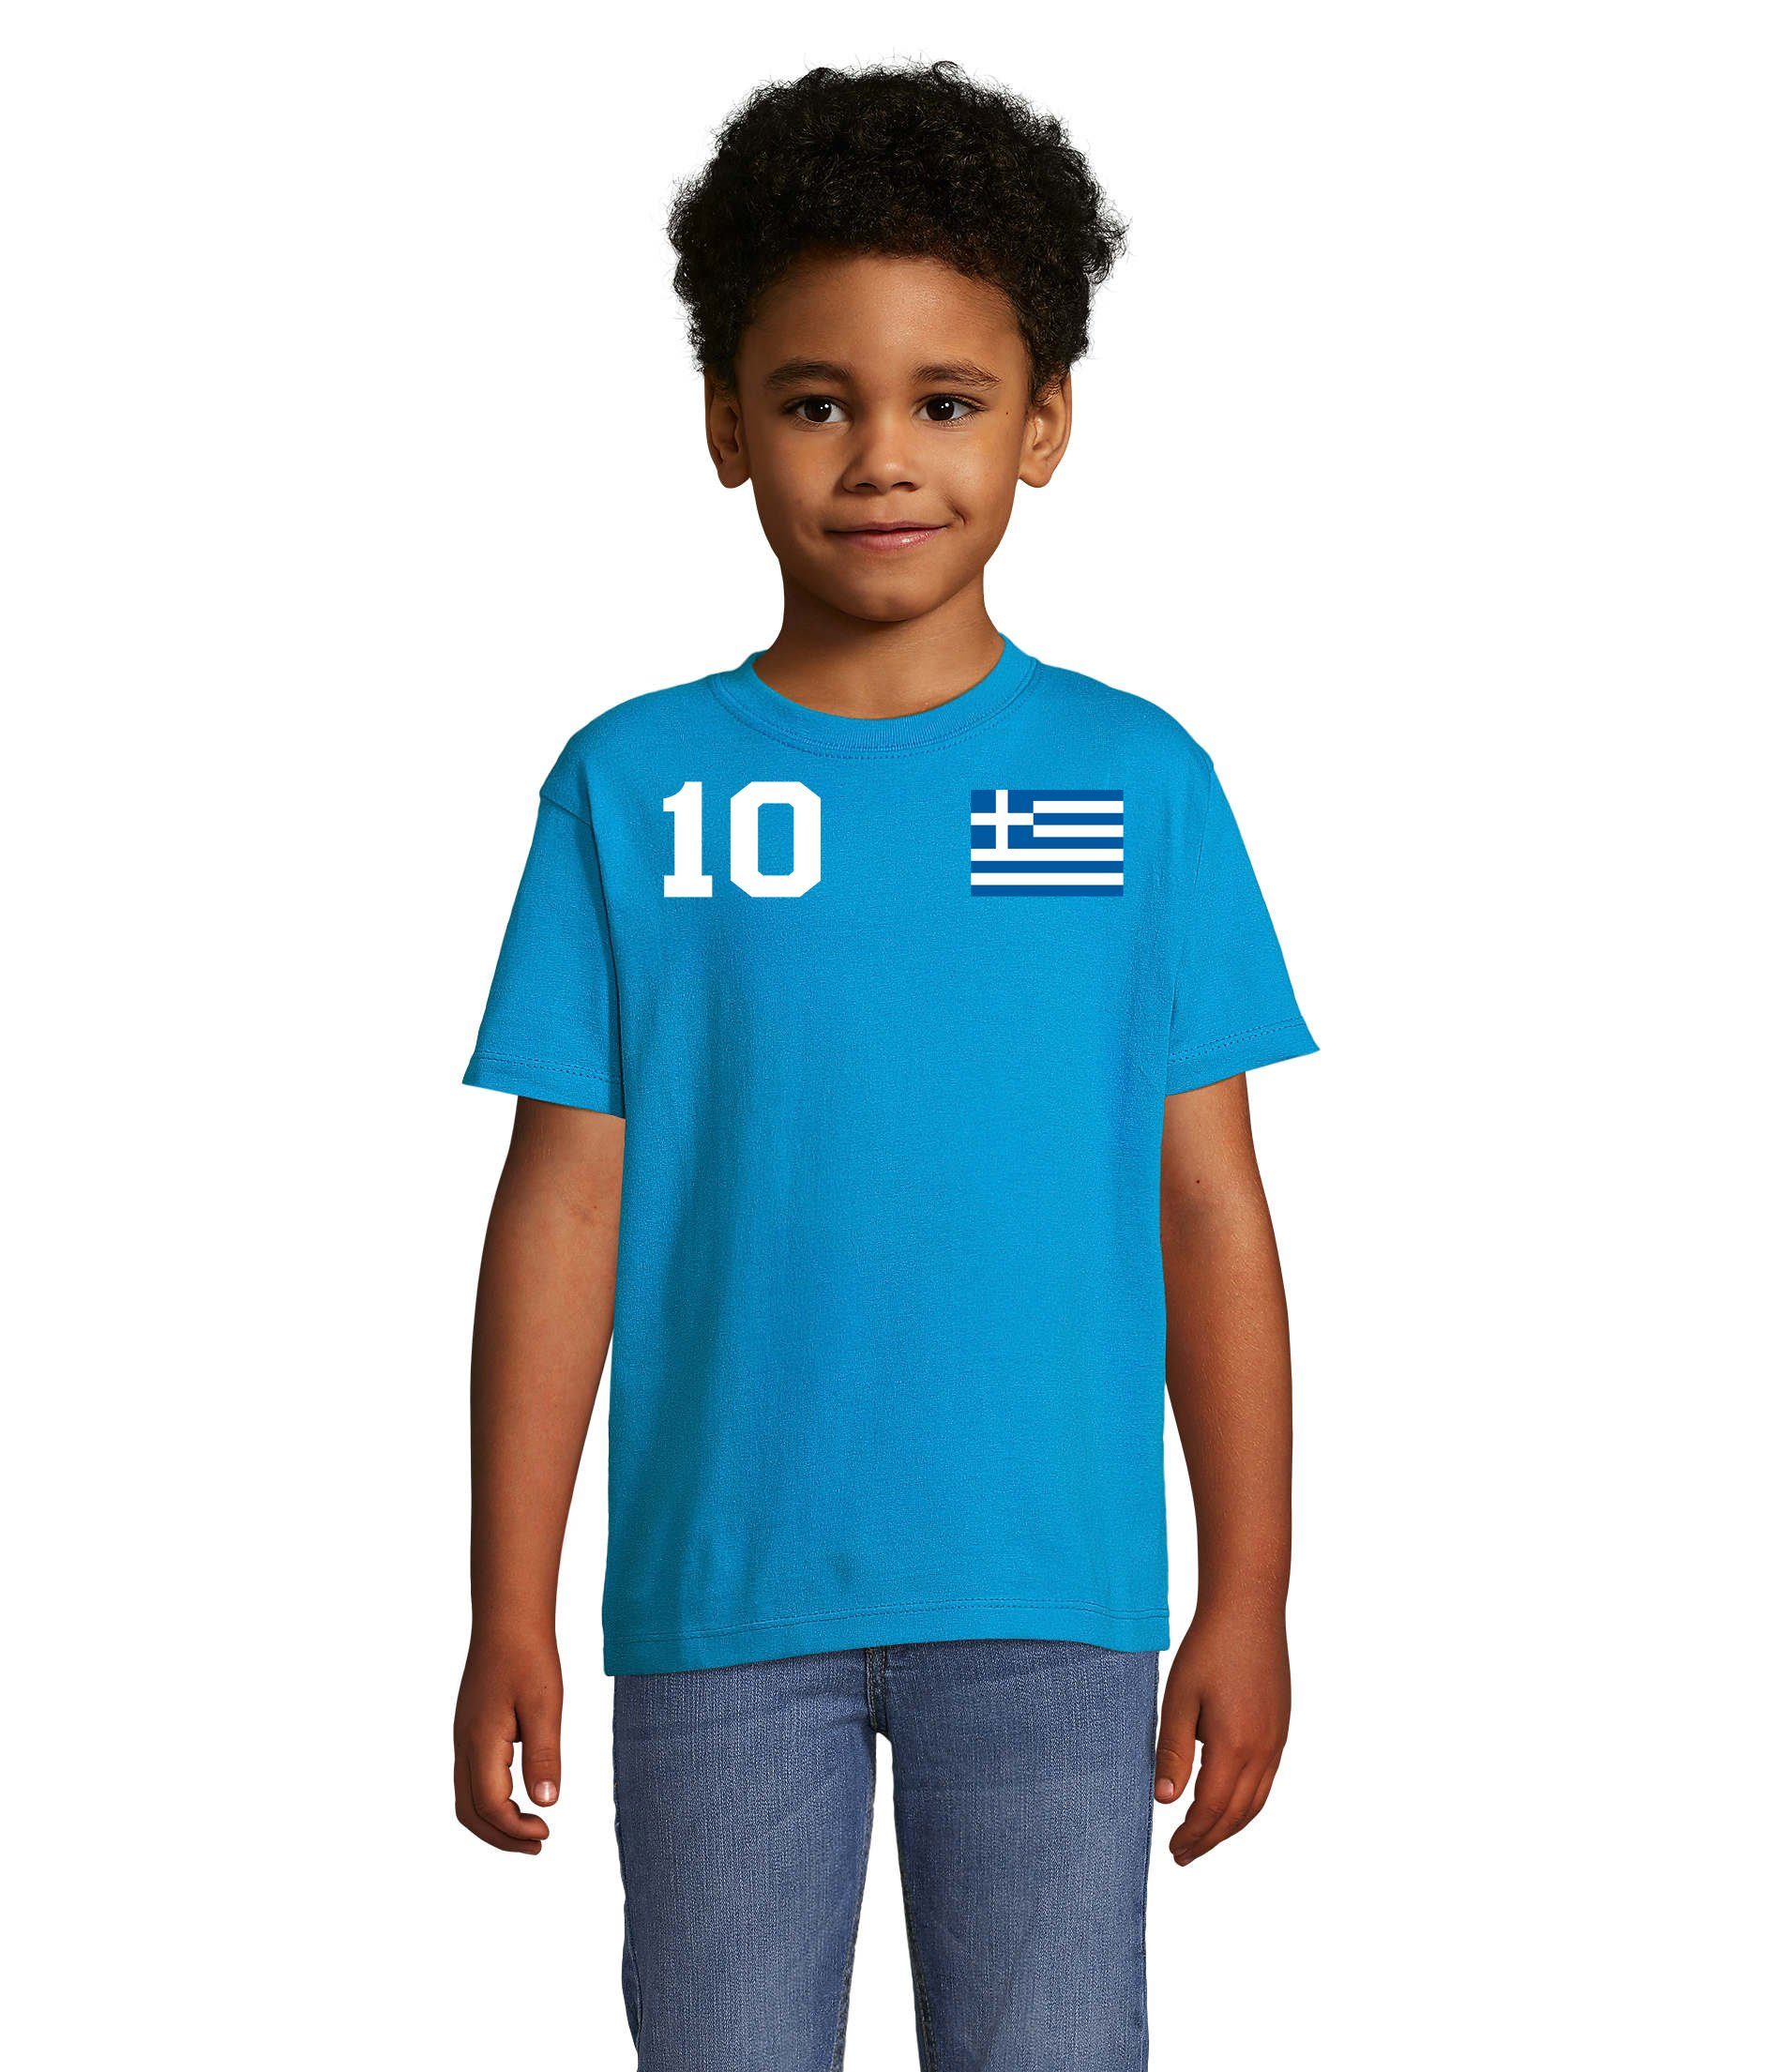 Blondie & Brownie T-Shirt Kinder Griechenland Sport Trikot Fußball Weltmeister Europa EM Weiss/Blau